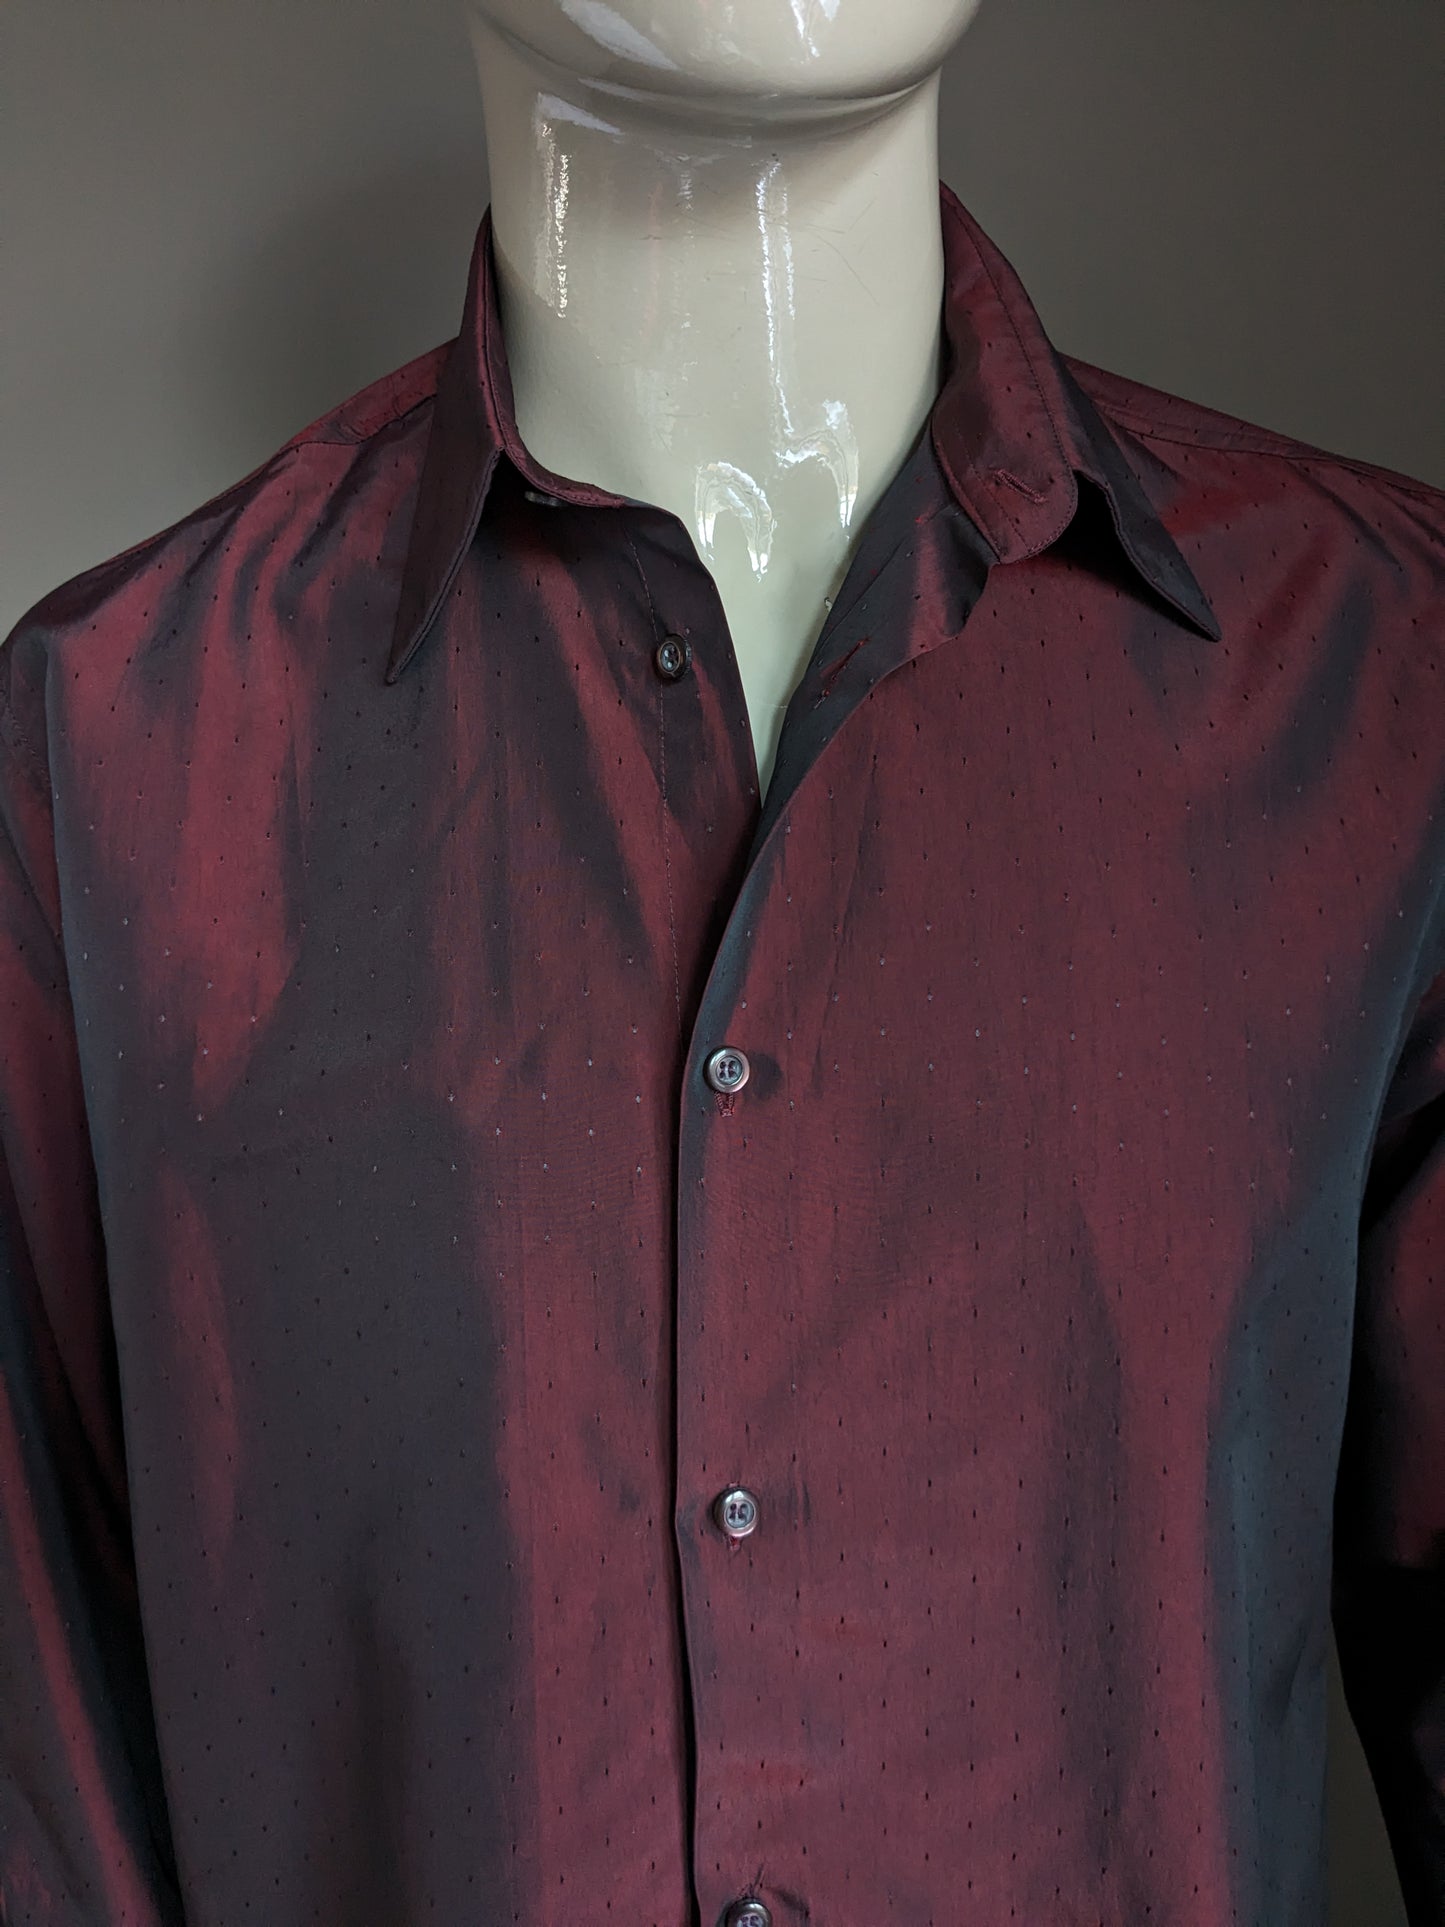 Camisa Vintage Angelo Litrico. Burdeos Motif Glossy. Talla L.